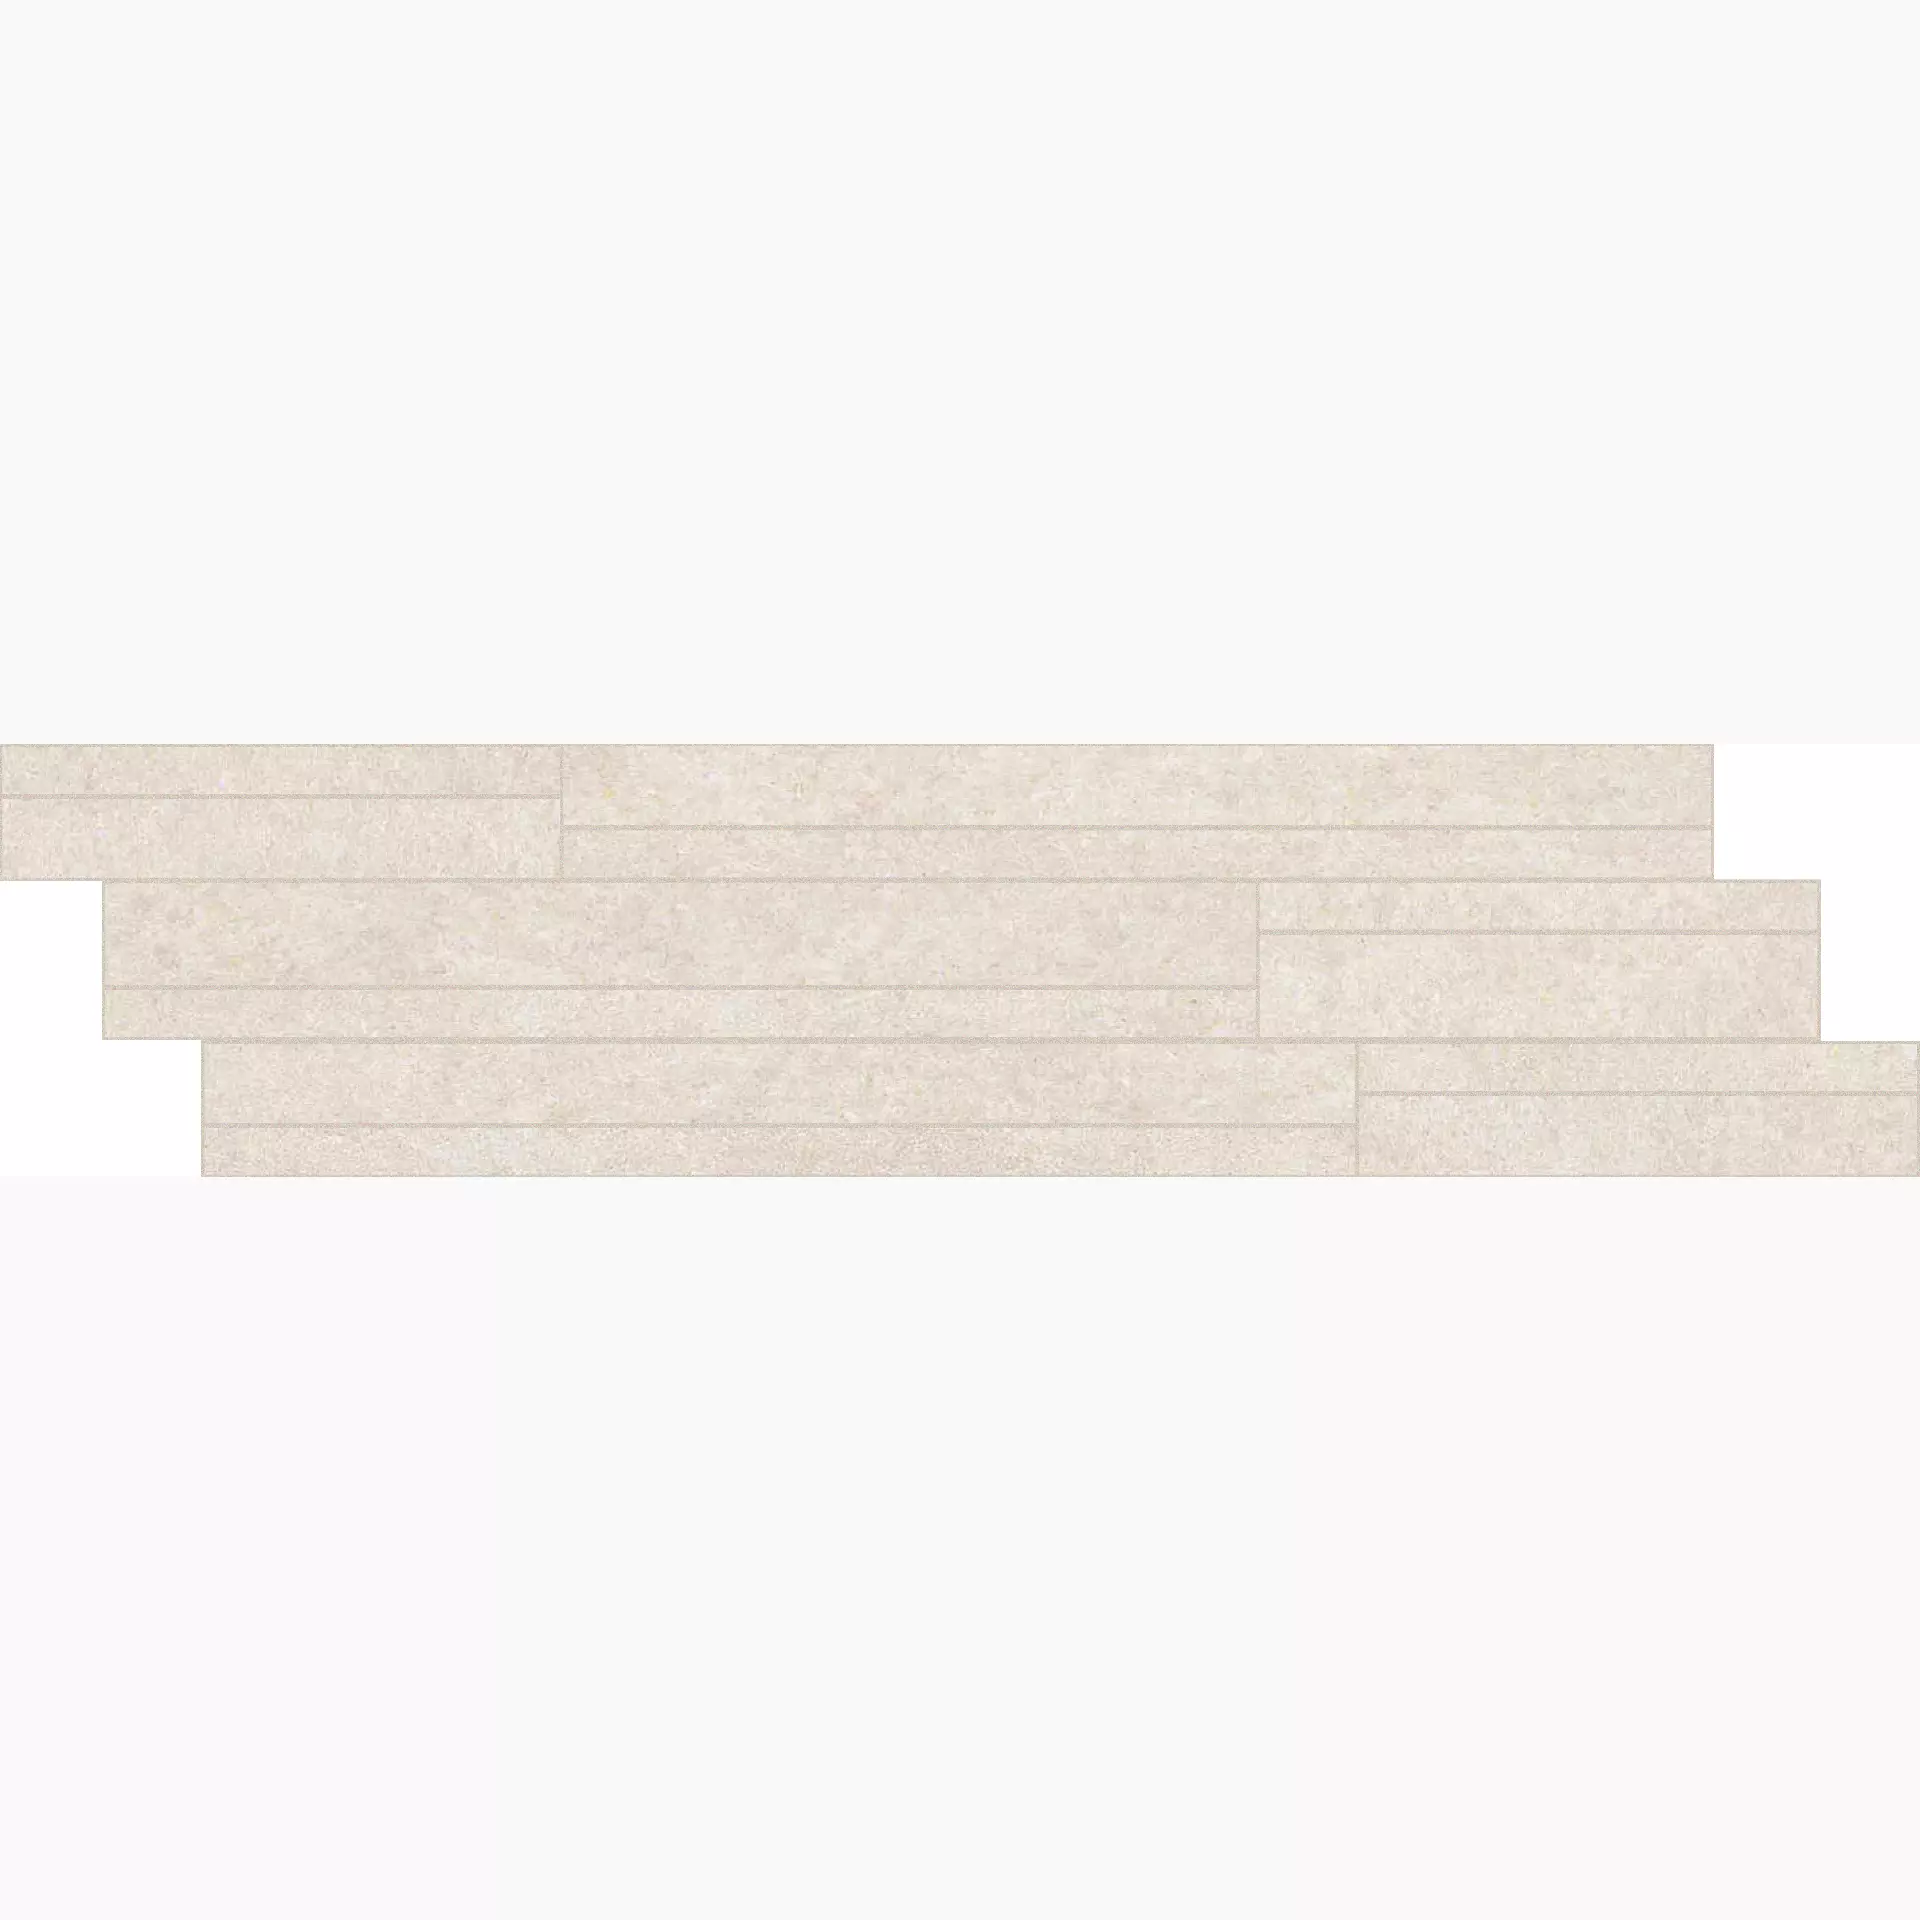 Florim Elemental Stone Of Cerim White Sandstone Naturale – Lucido White Sandstone 767024 glaenzend natur 15x60cm Modul Bordüre Sfalsato Mix rektifiziert 9mm